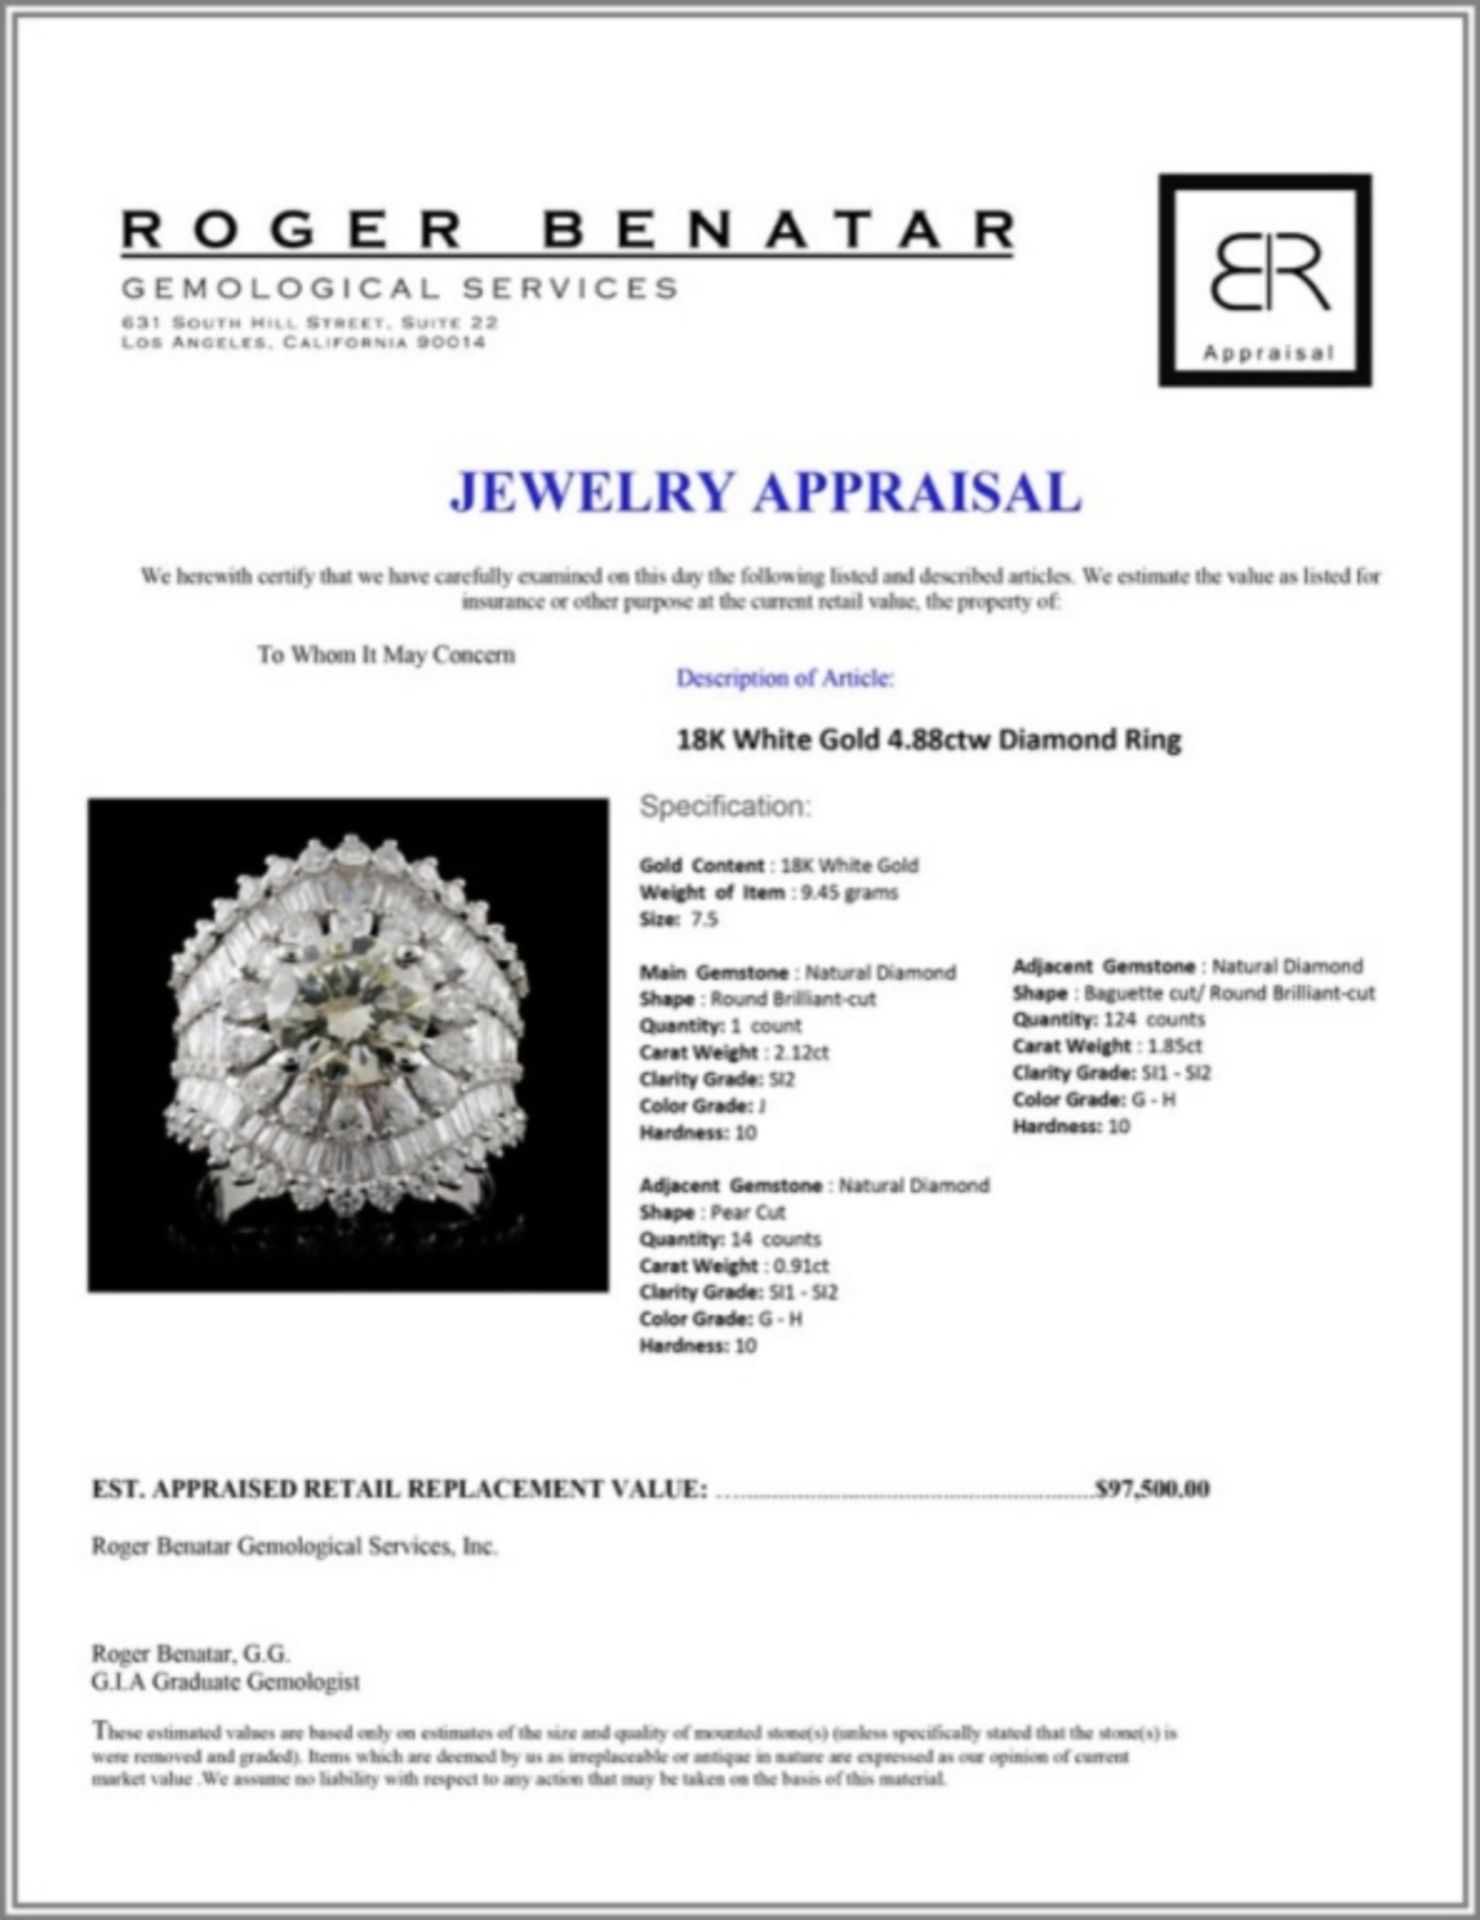 18K White Gold 4.88ctw Diamond Ring - Image 4 of 4